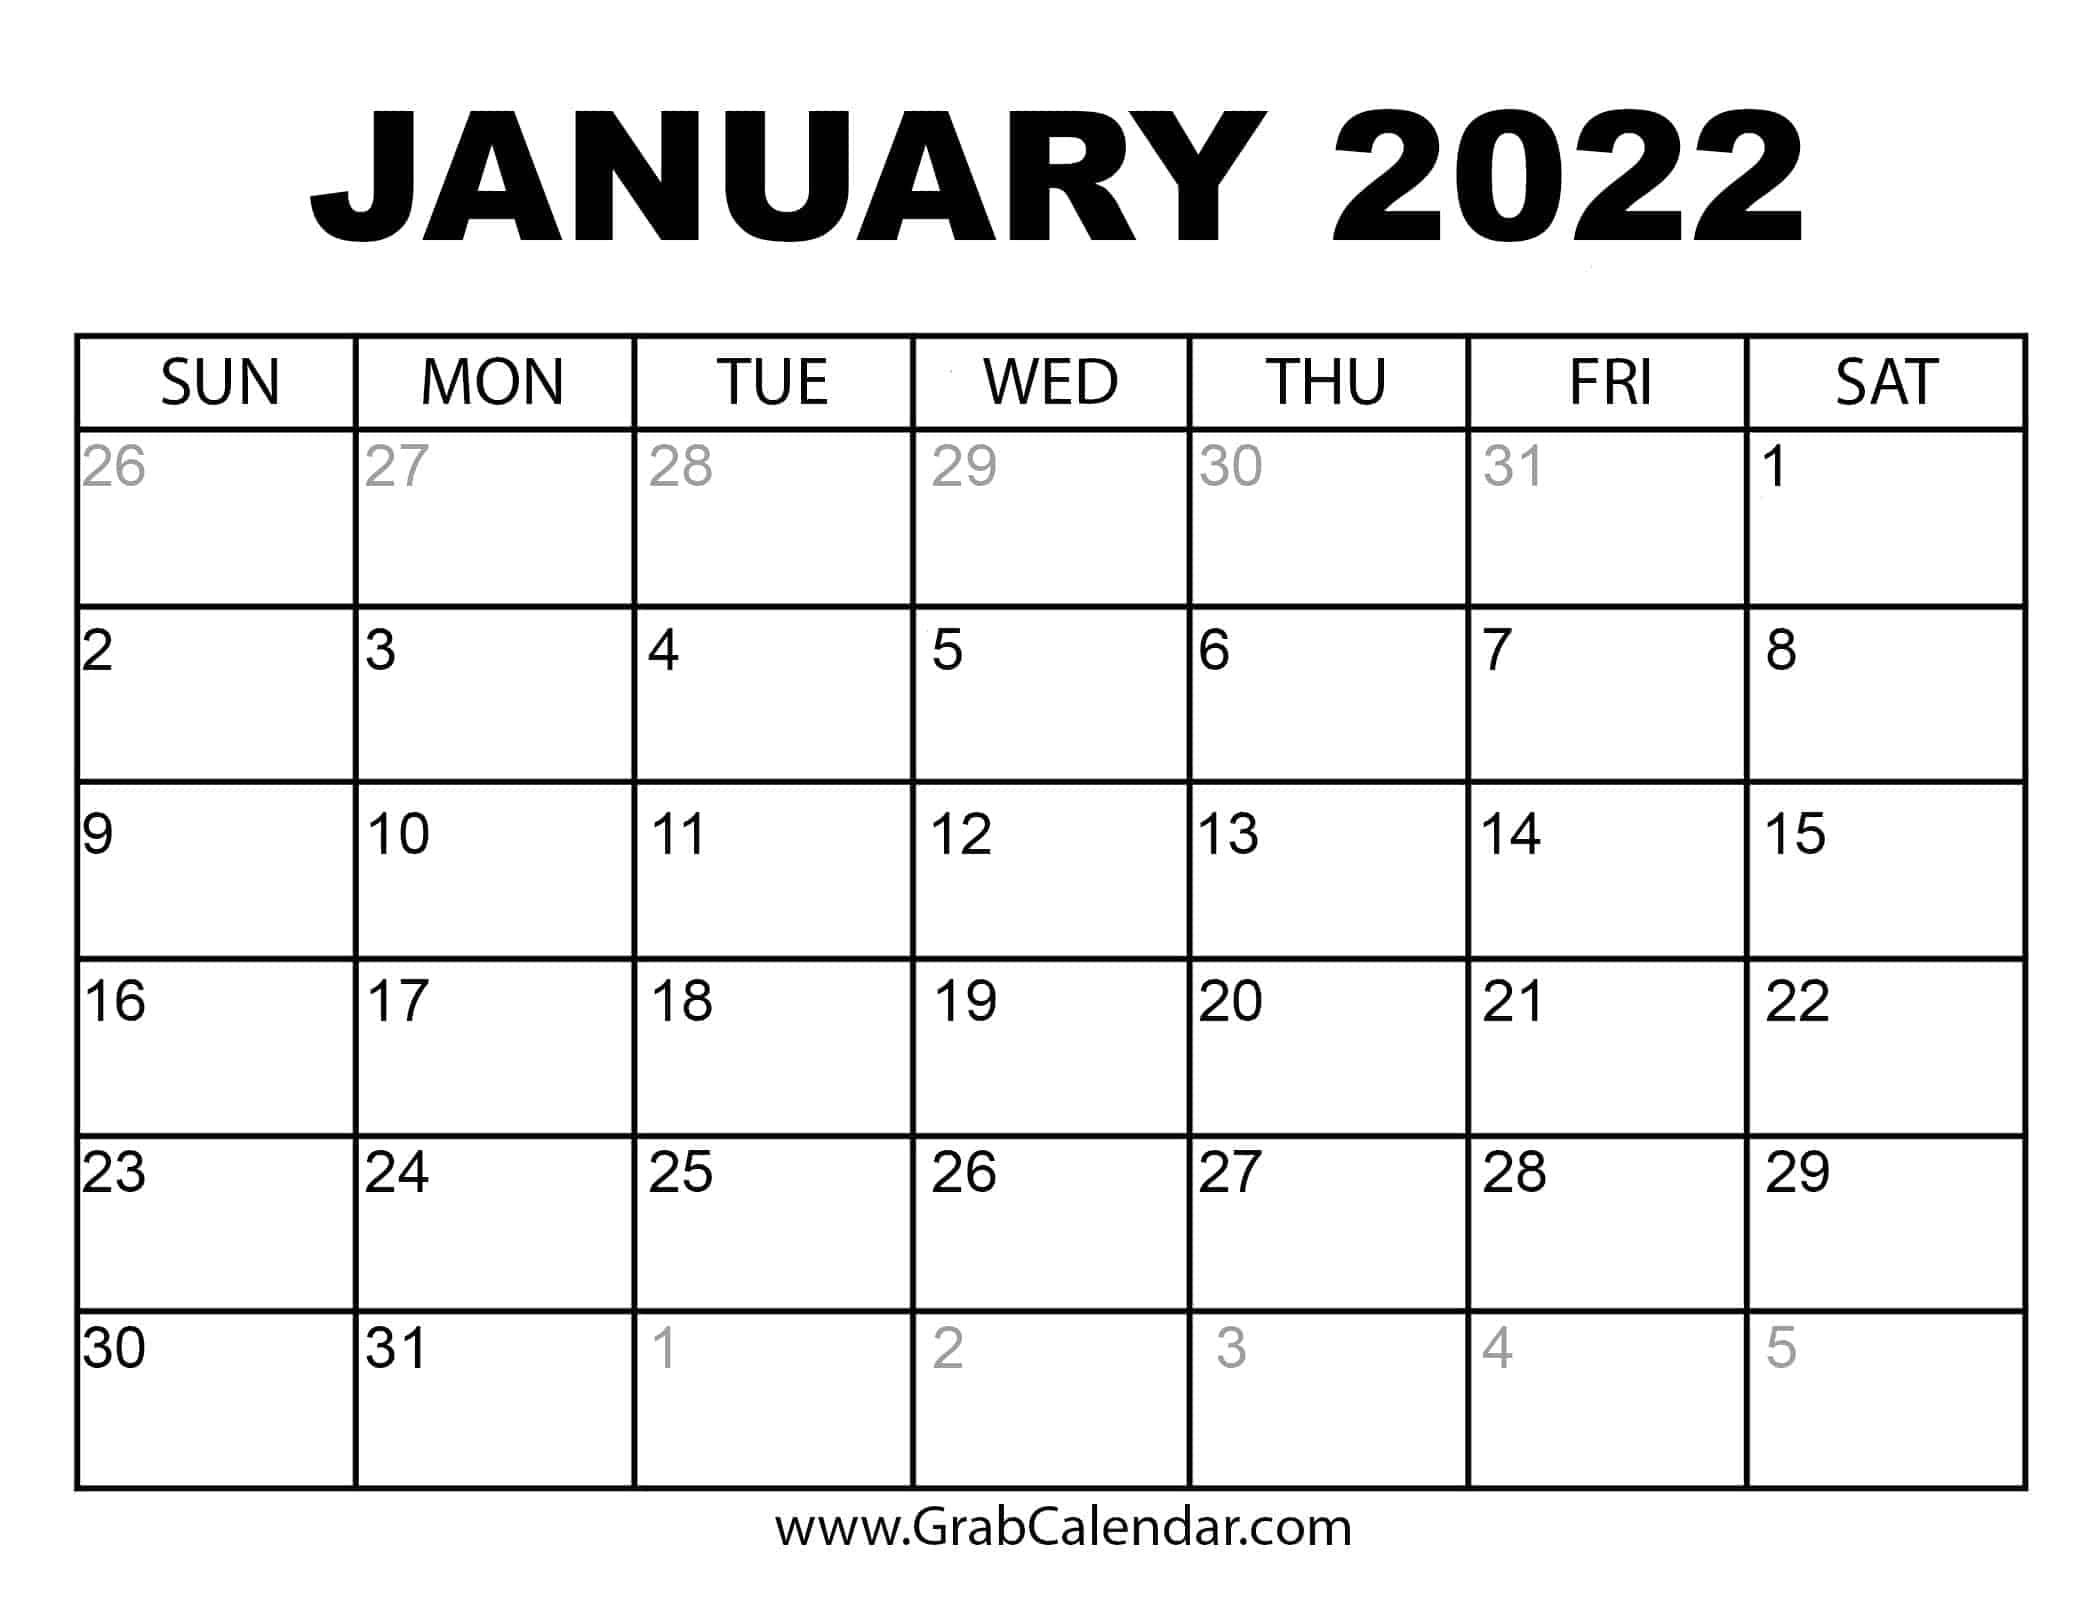 January Schedule 2022 Printable January 2022 Calendar